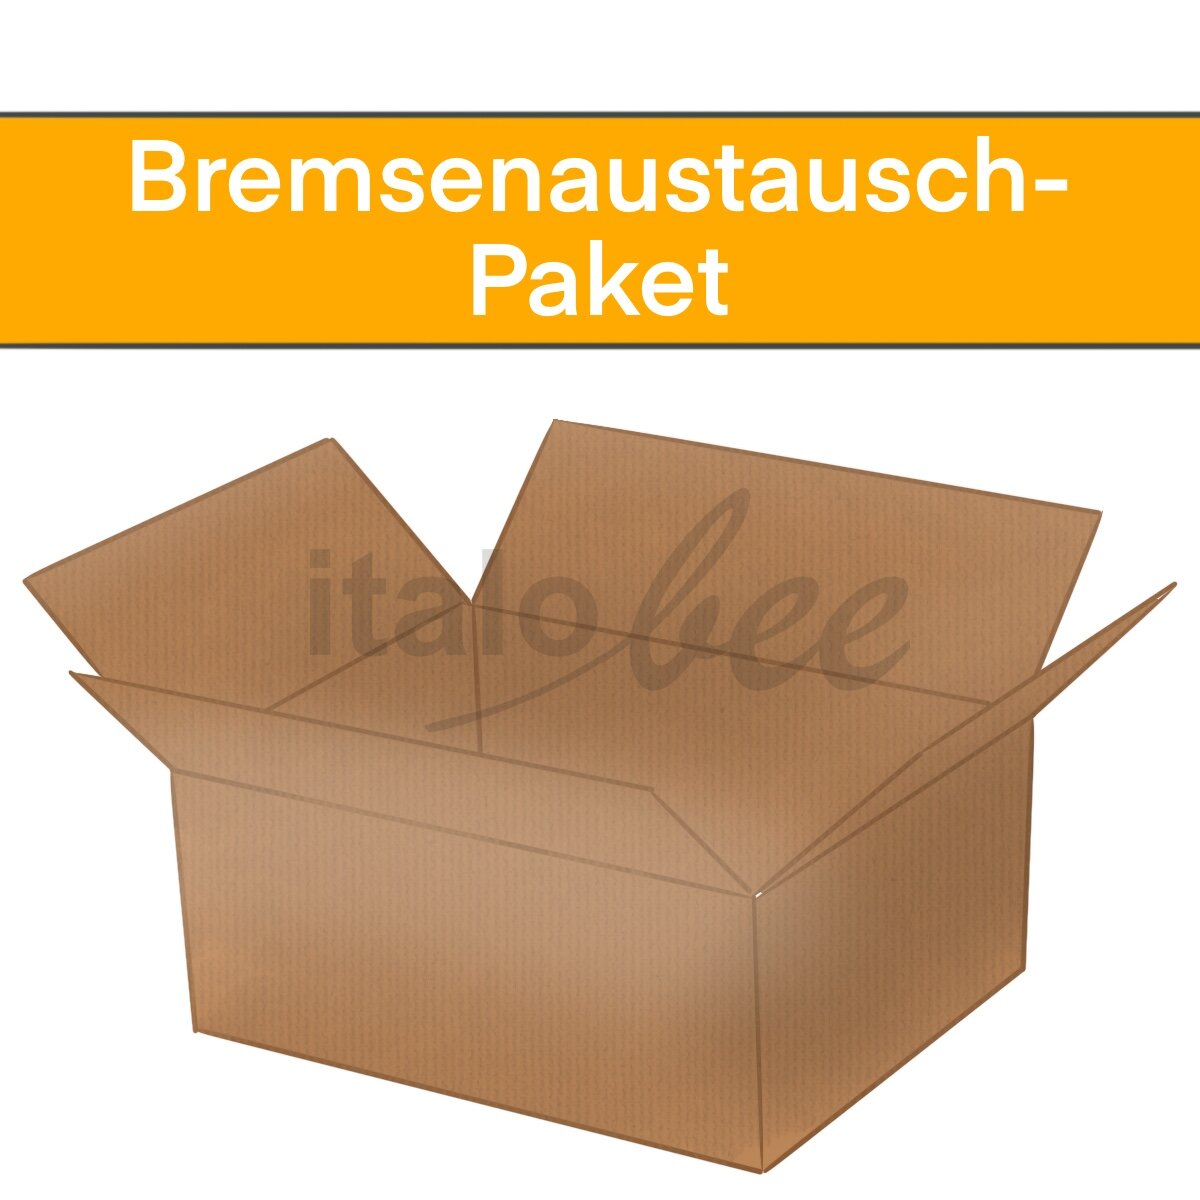 Bremsenaustausch-Paket - italobee Shop, 98,90 €